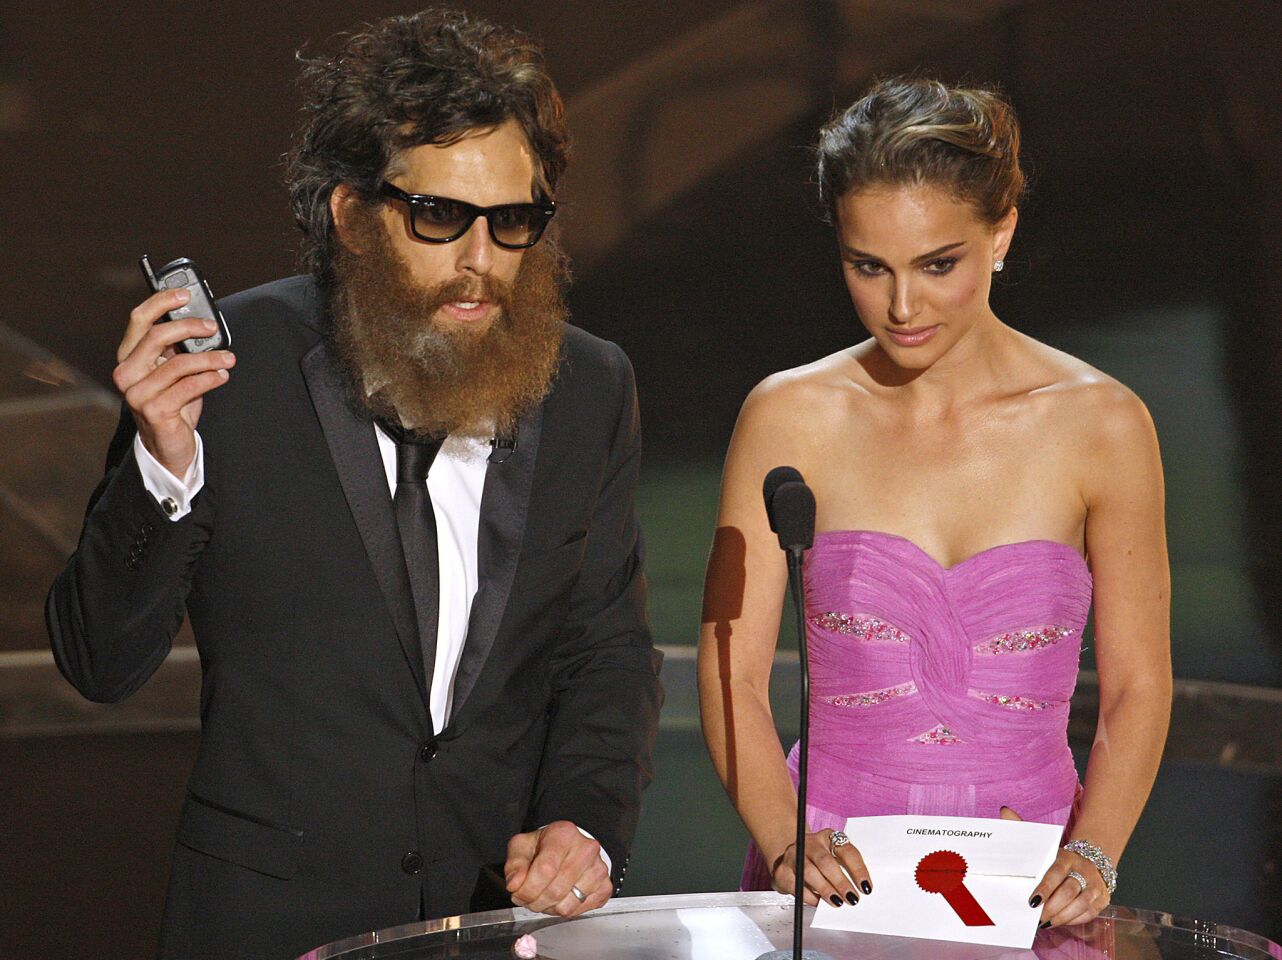 Ben Stiller and Natalie Portman present at the 81st Academy Awards.